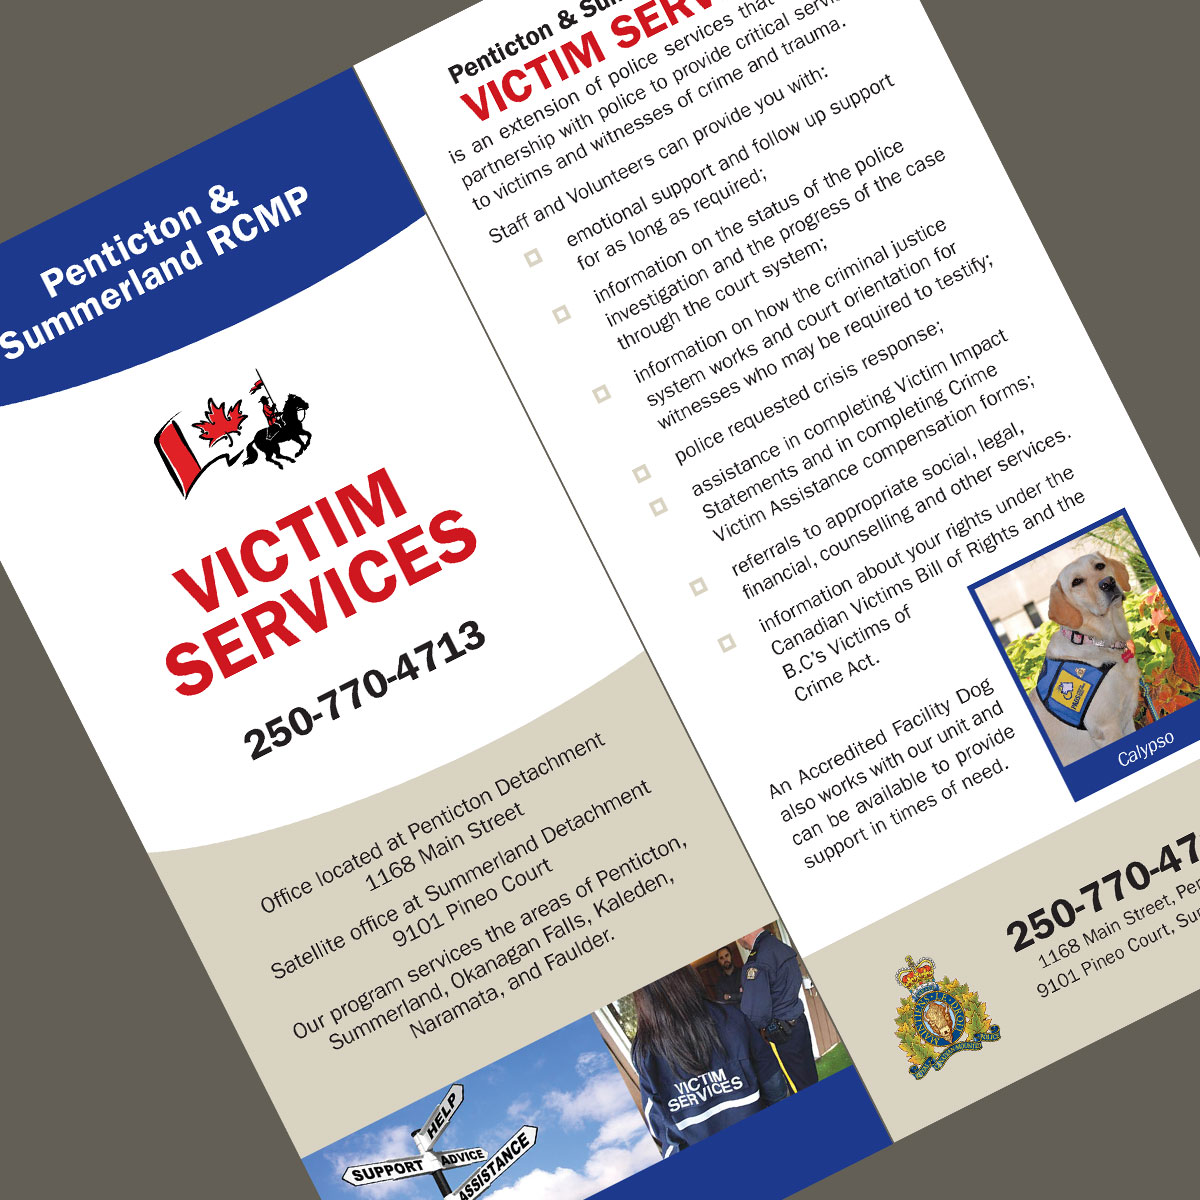 Victim Services rack card